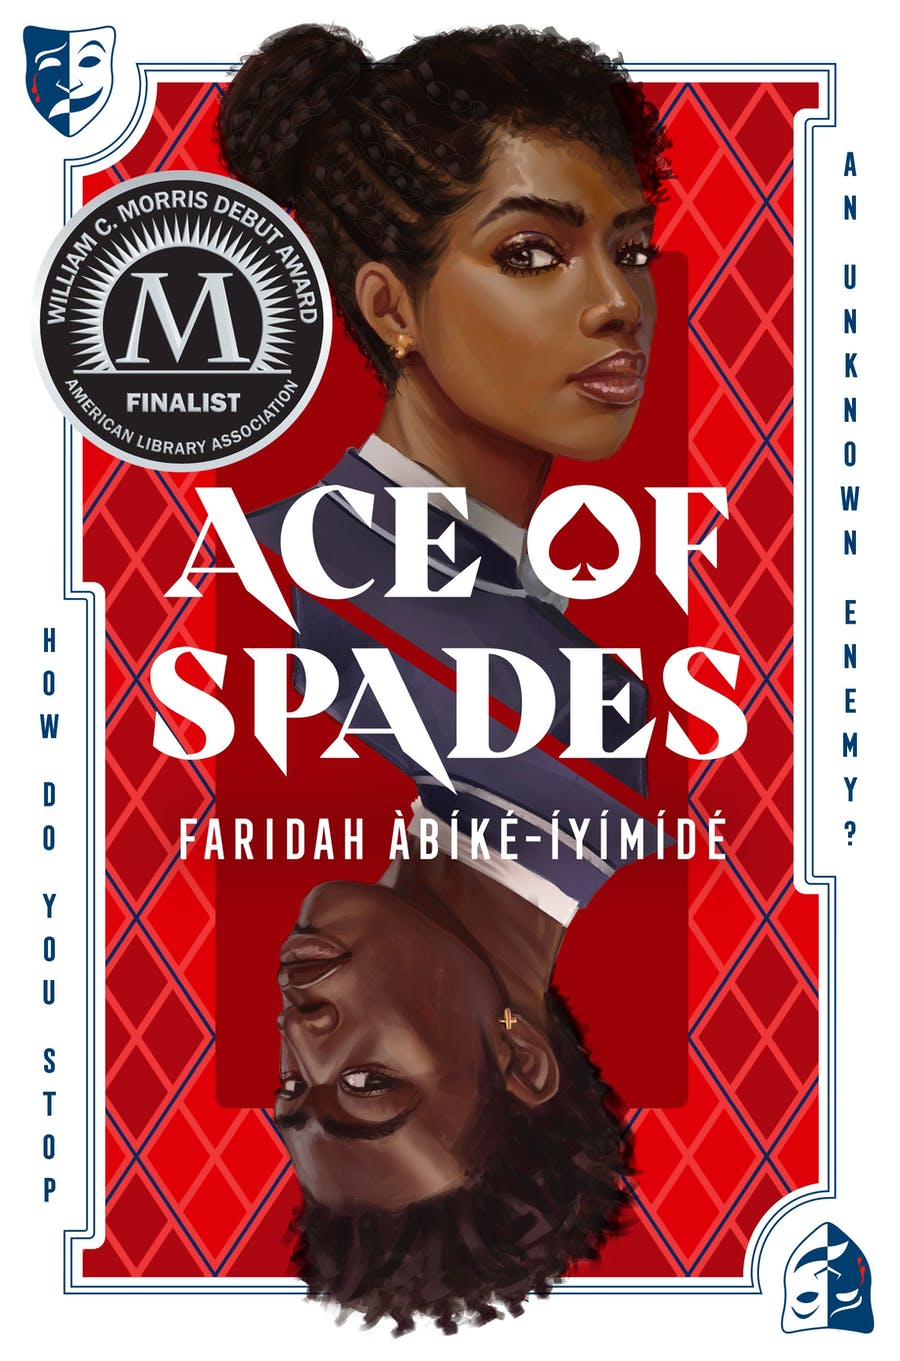 Ace of Spades | Faridah Abike-Iyimide image15